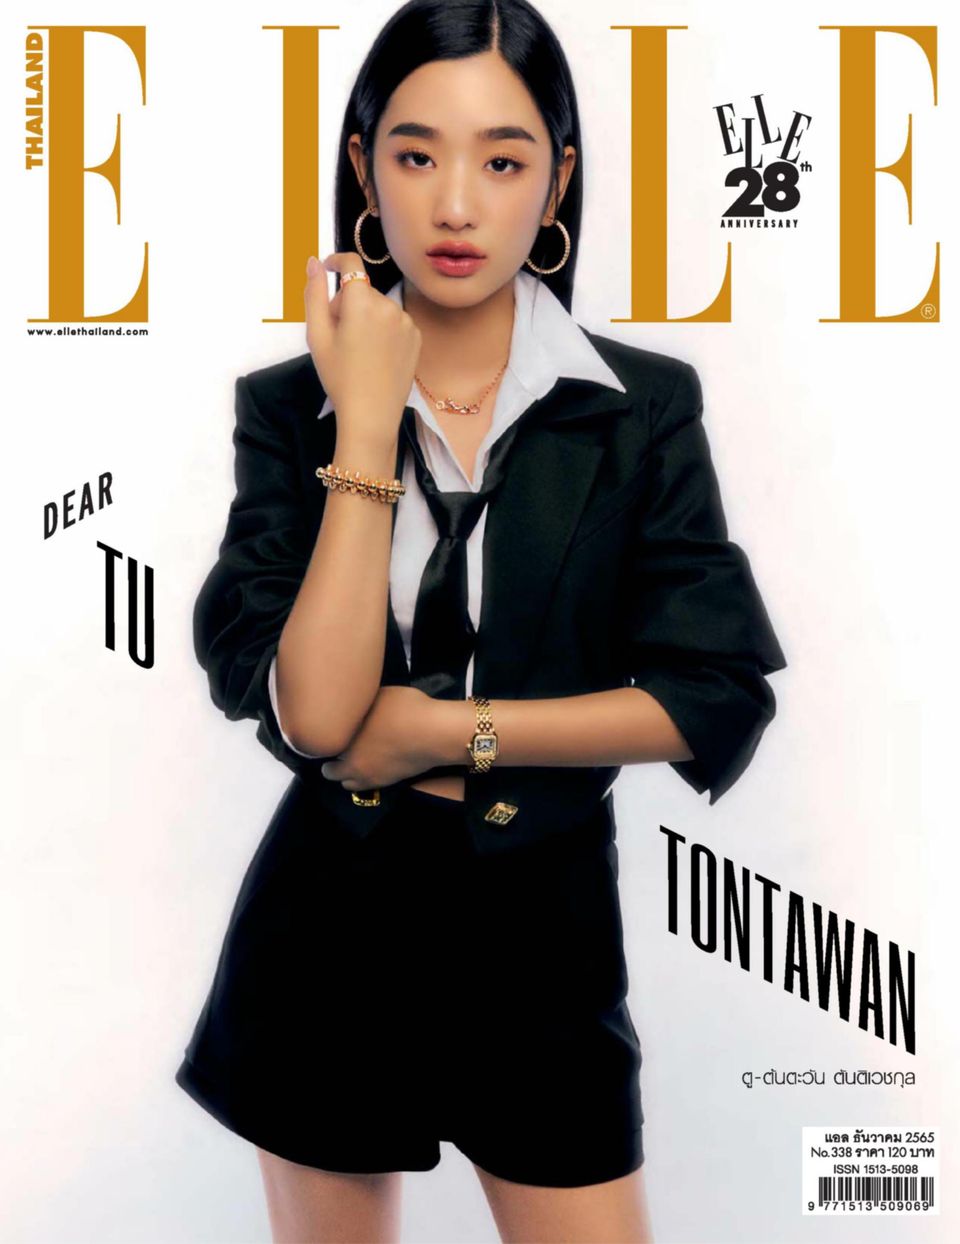 Elle Thailand Magazine (Digital) Subscription Discount